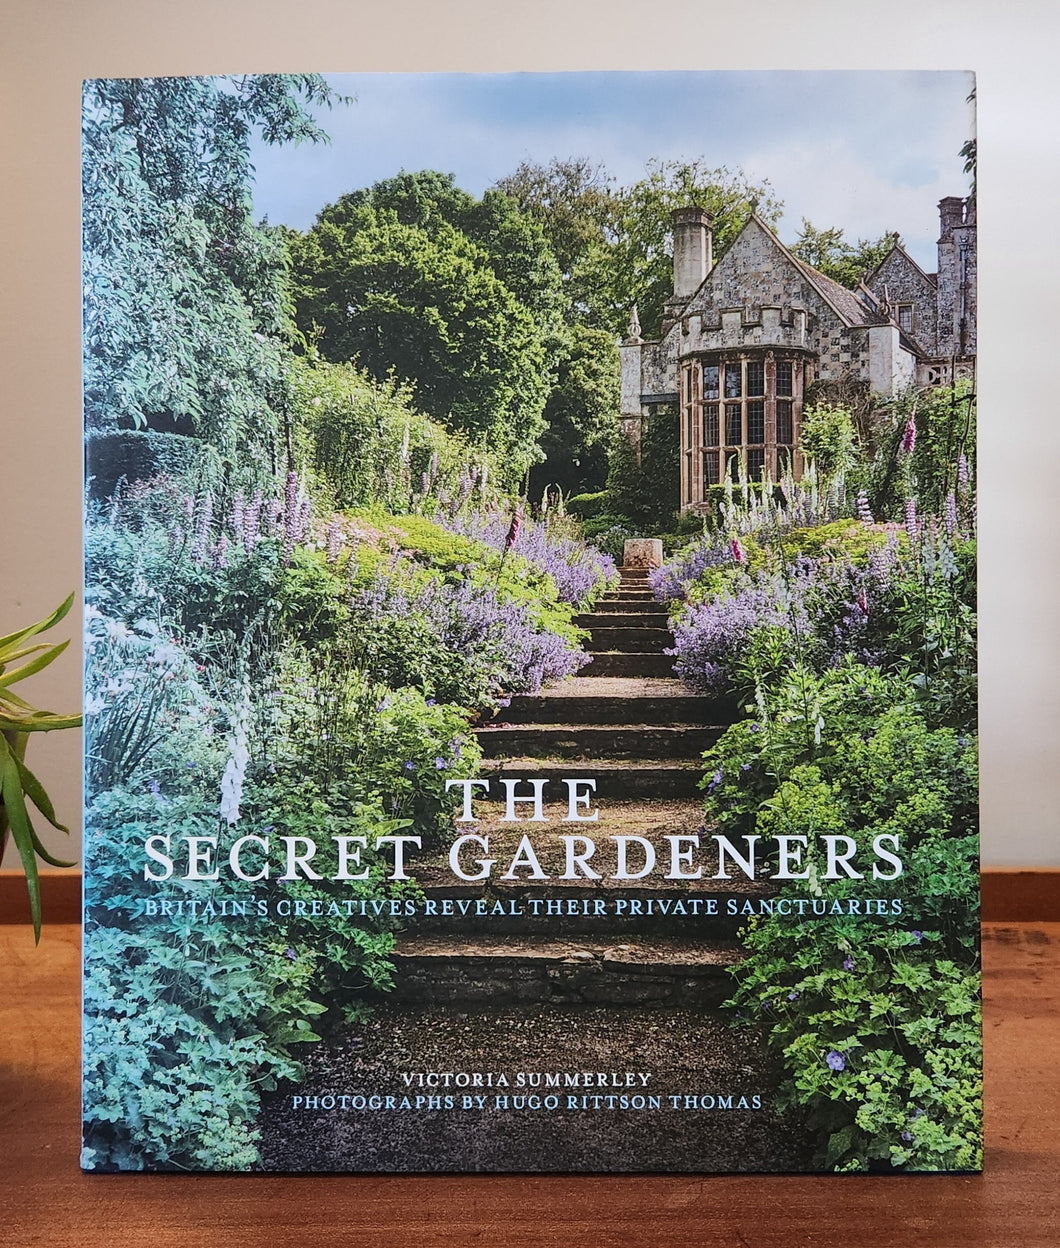 The Secret Gardeners by Victoria Summerley